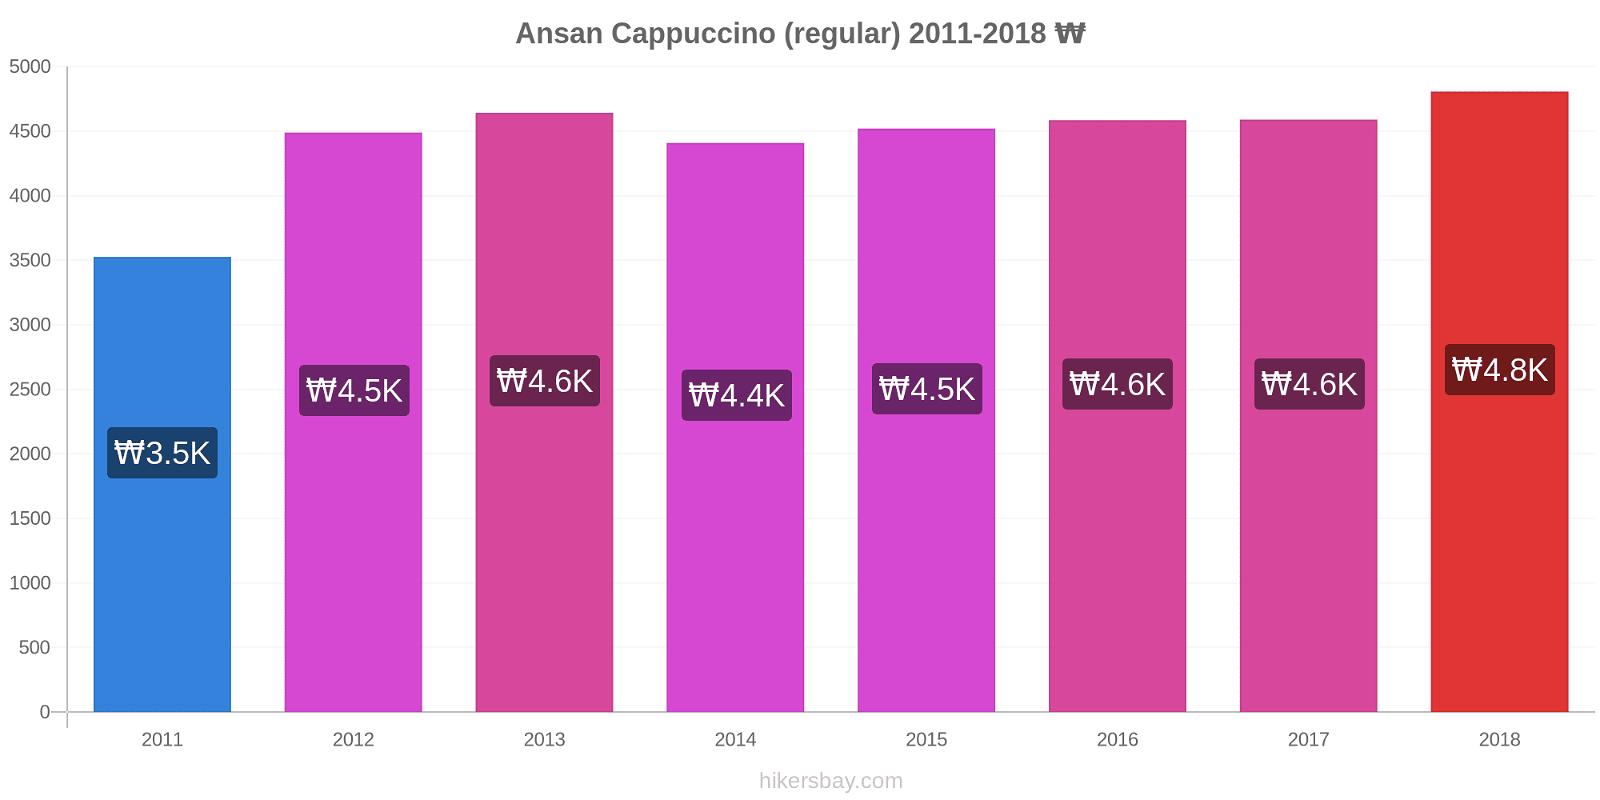 Ansan price changes Cappuccino (regular) hikersbay.com